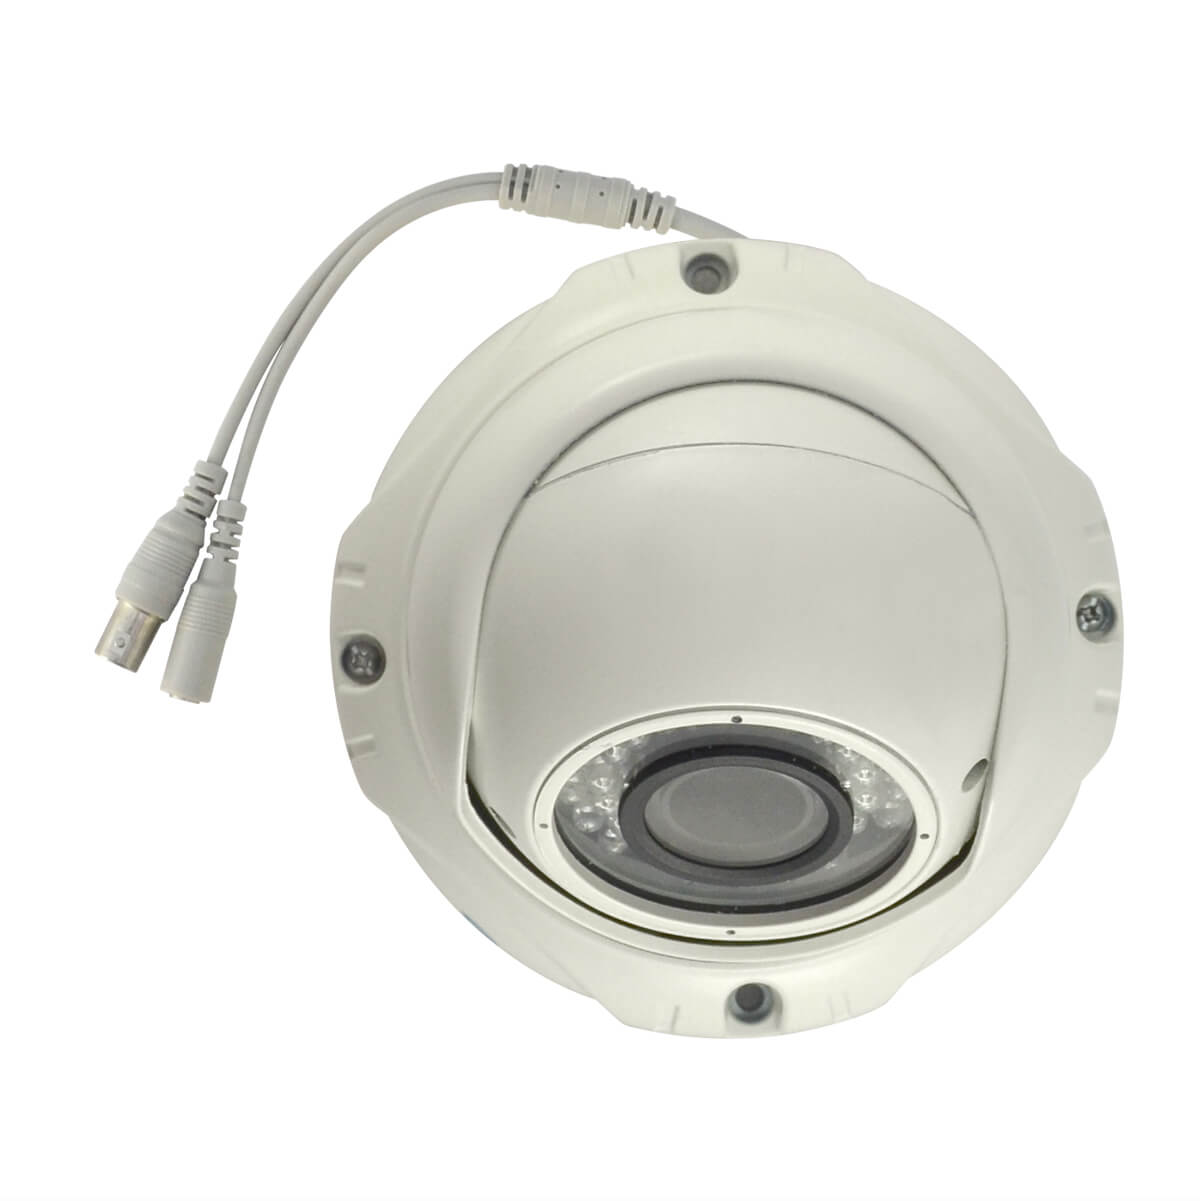 Camara tipo domo, Sensor CCD Sony 1/3, 700TVL, 24 LEDs, 20m IR, UTC